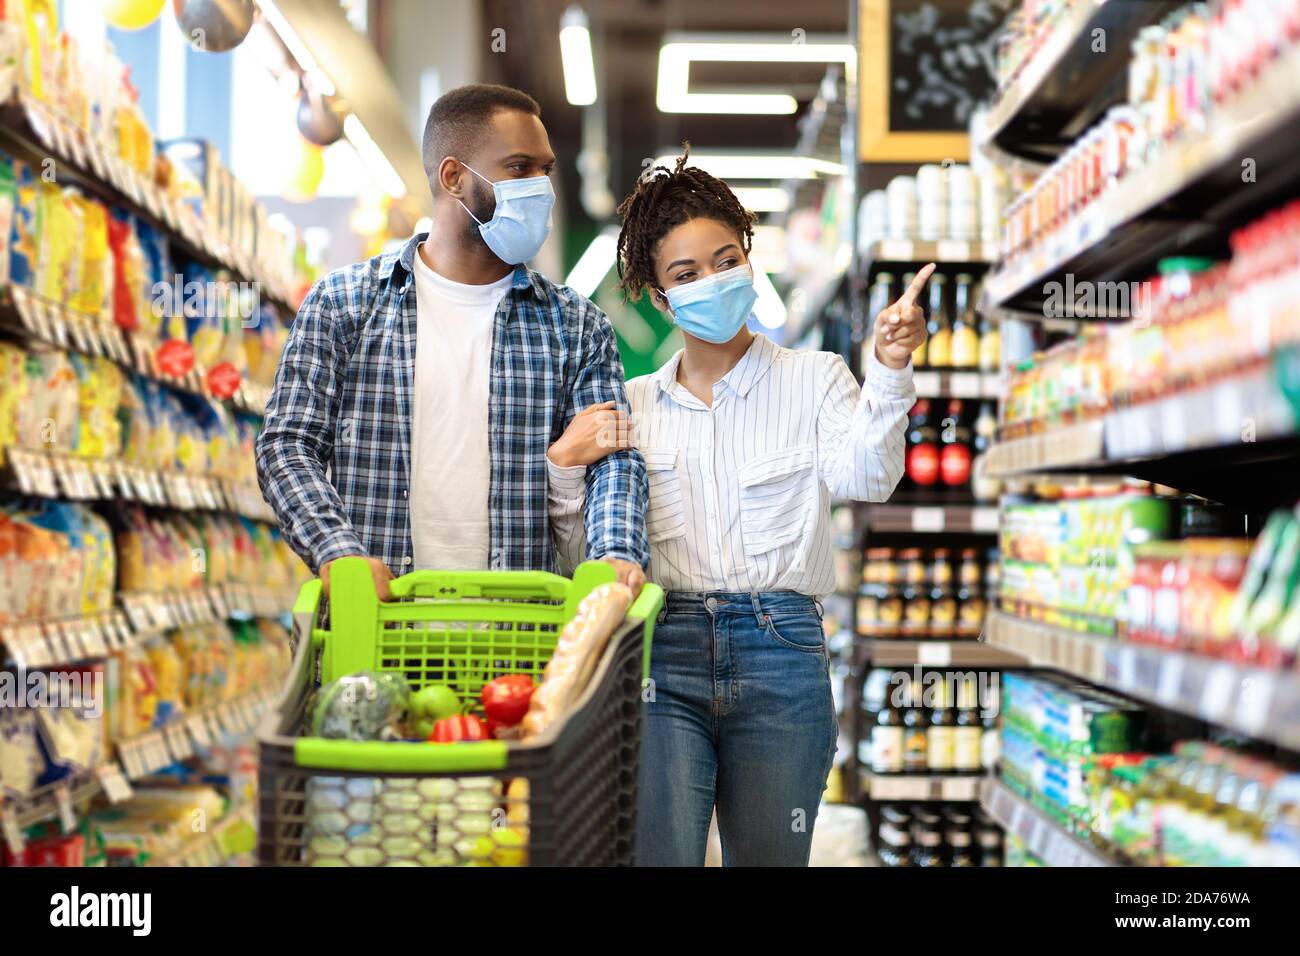 https://c8.alamy.com/comp/2DA76WA/african-couple-in-protective-masks-in-supermarket-doing-grocery-shopping-2DA76WA.jpg